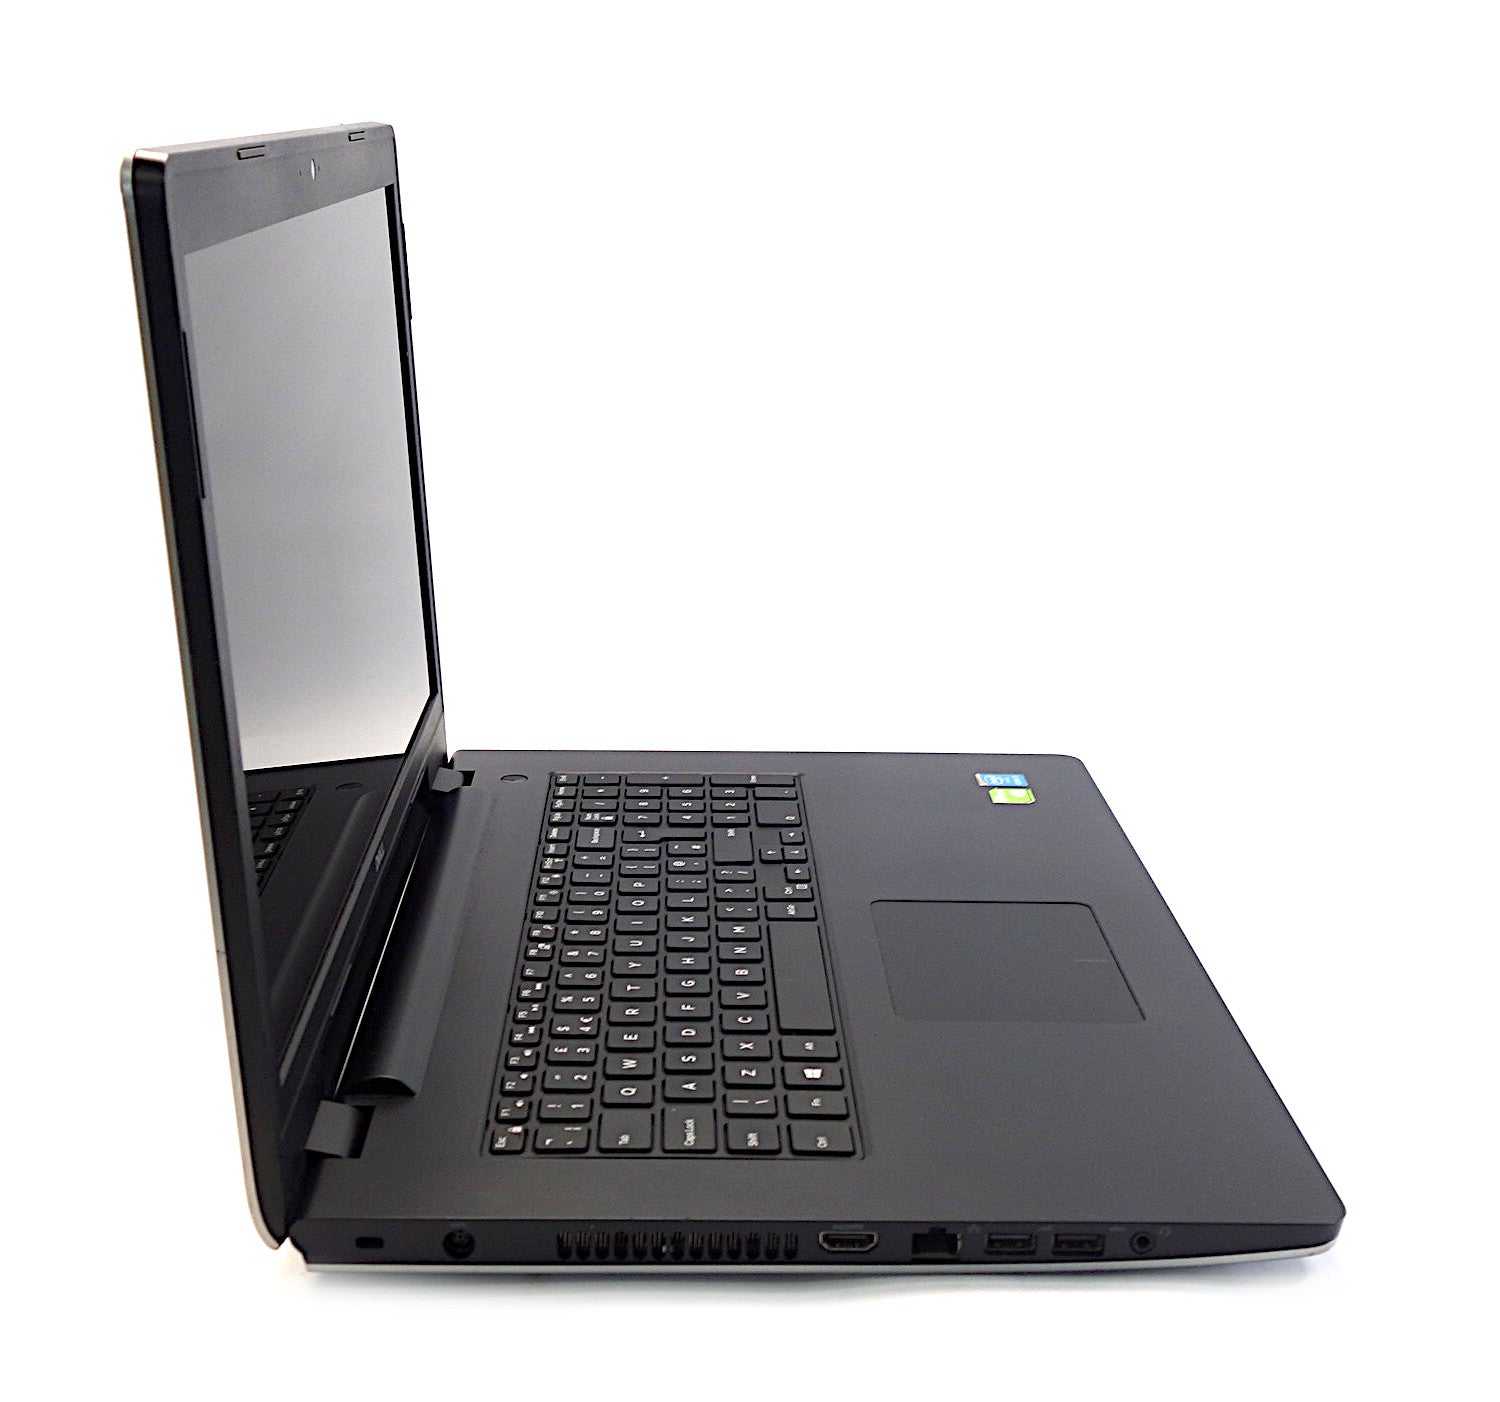 Dell Inspiron 5749 Laptop, 17.3" Intel Core i7, 8GB RAM, 250GB SSD